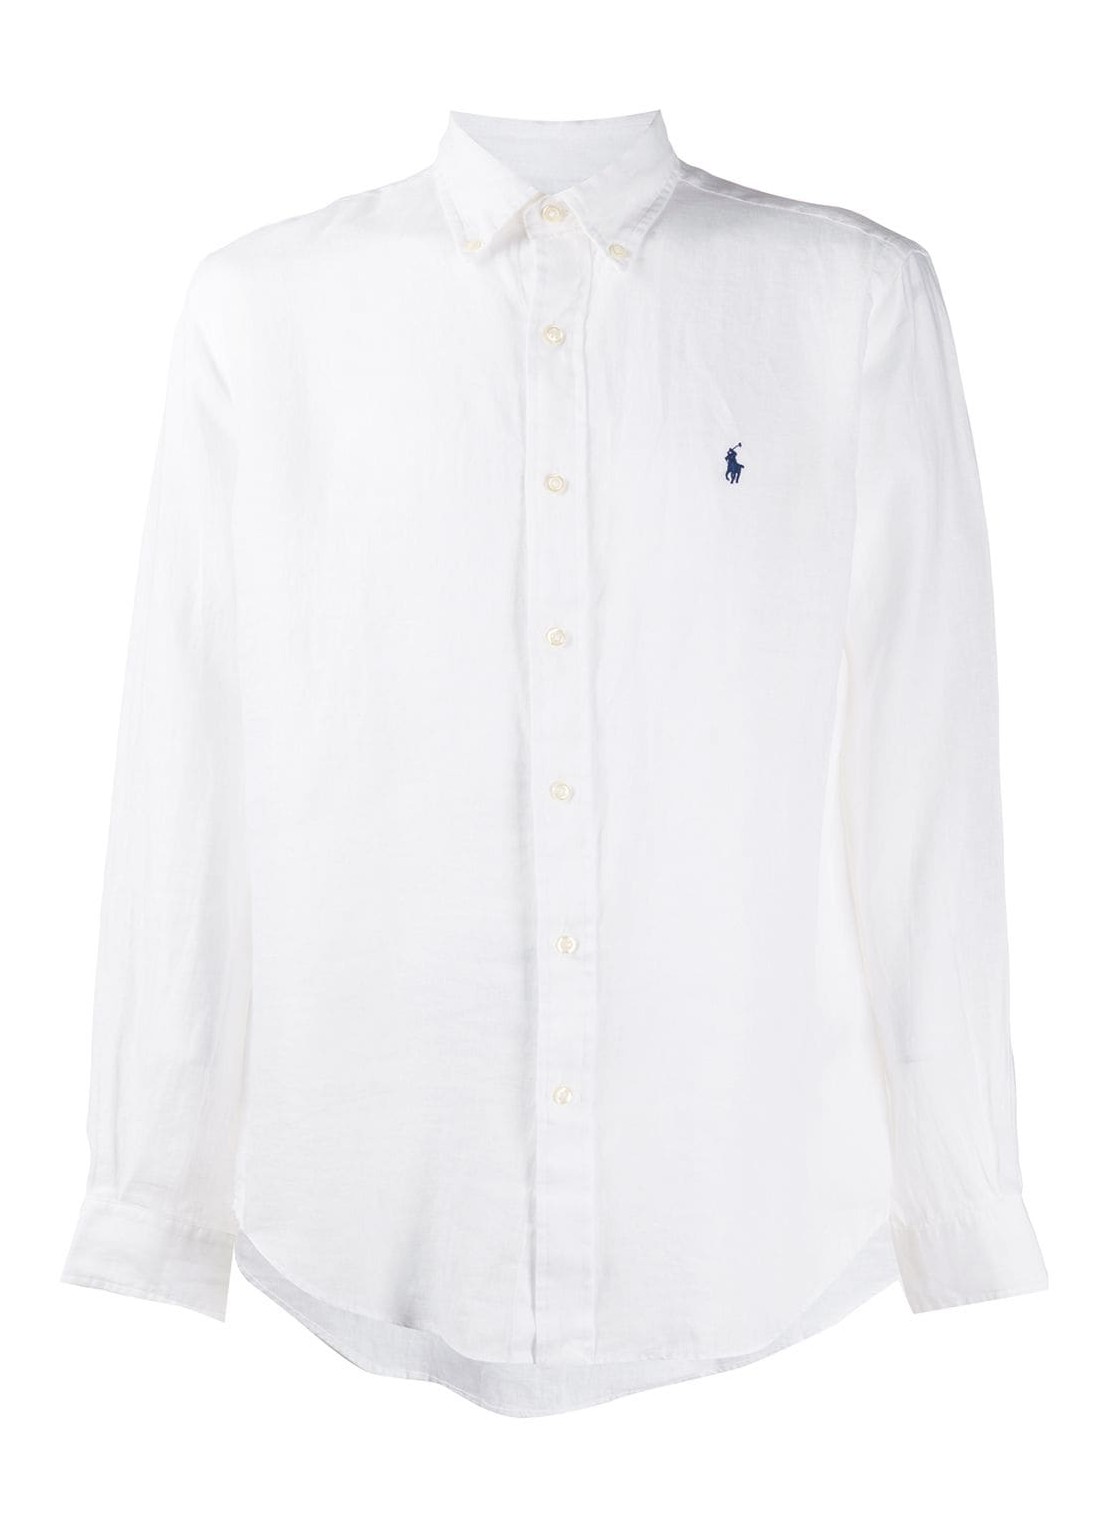 Camiseria polo ralph lauren cubdppcs-long sleeve-sport shirt - 710794141005 white talla blanco
 